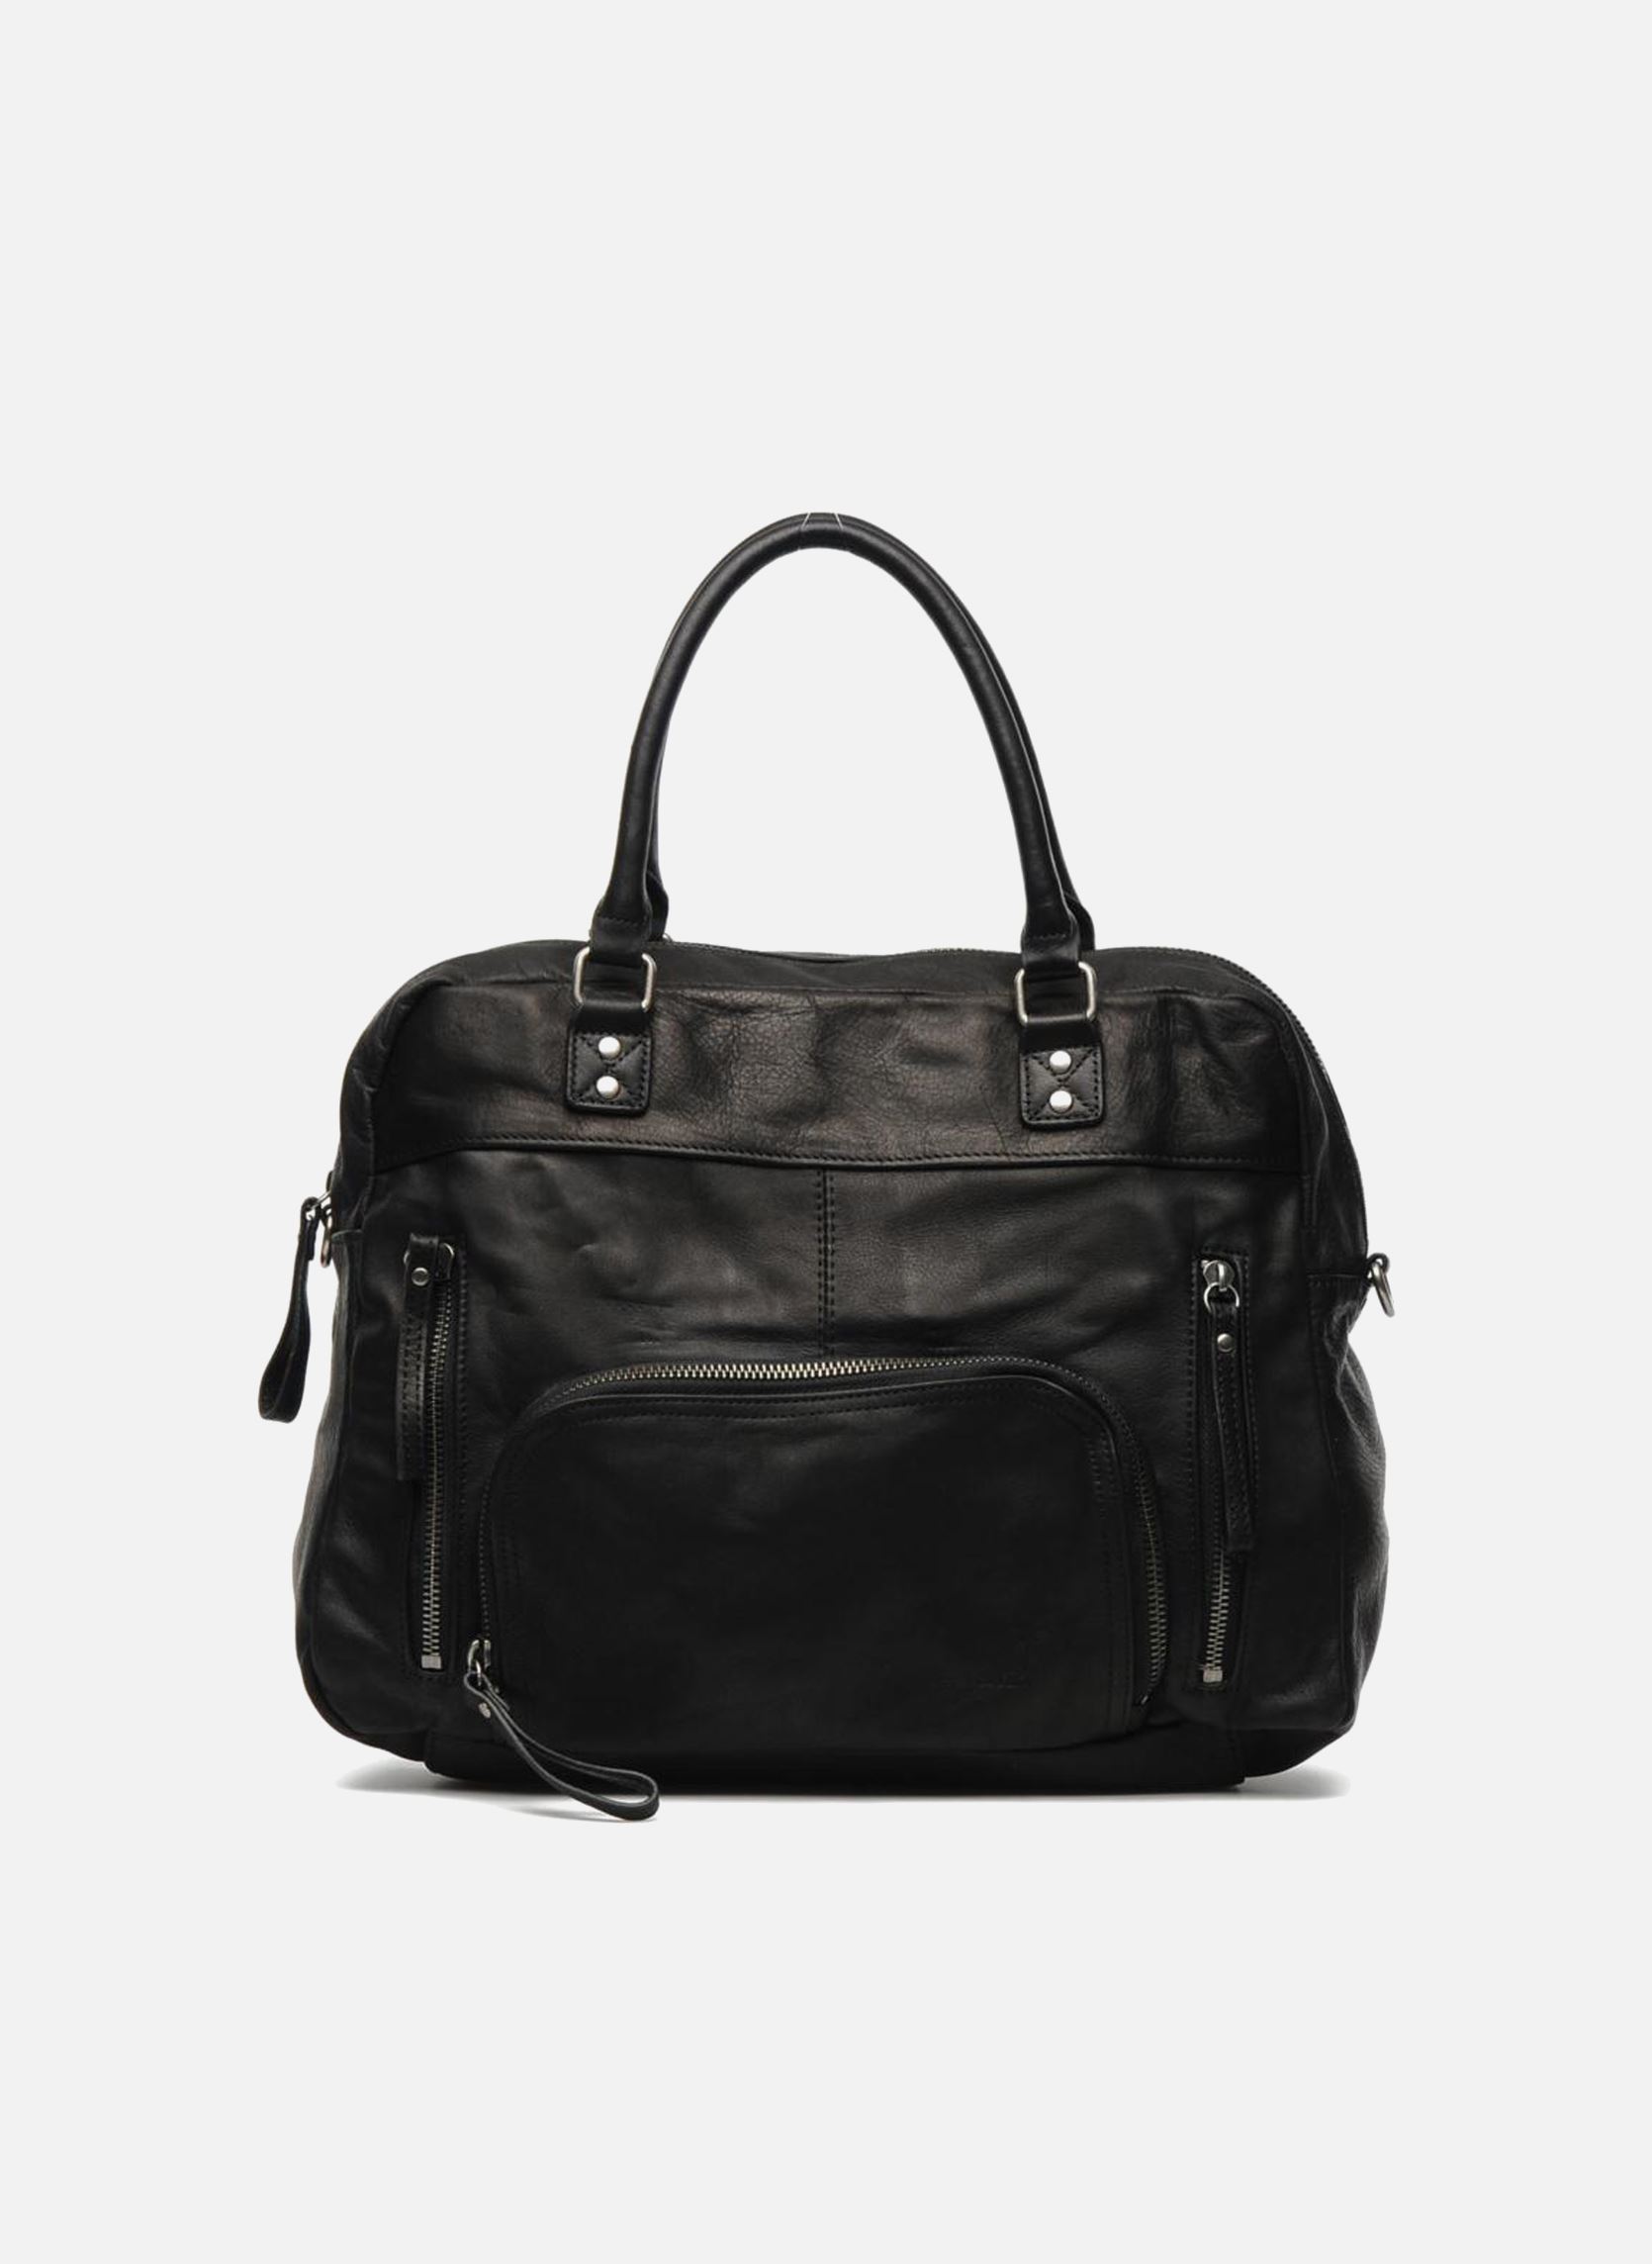 Nat & Nin Macy Handbags in Black at Sarenza.co.uk (115594)